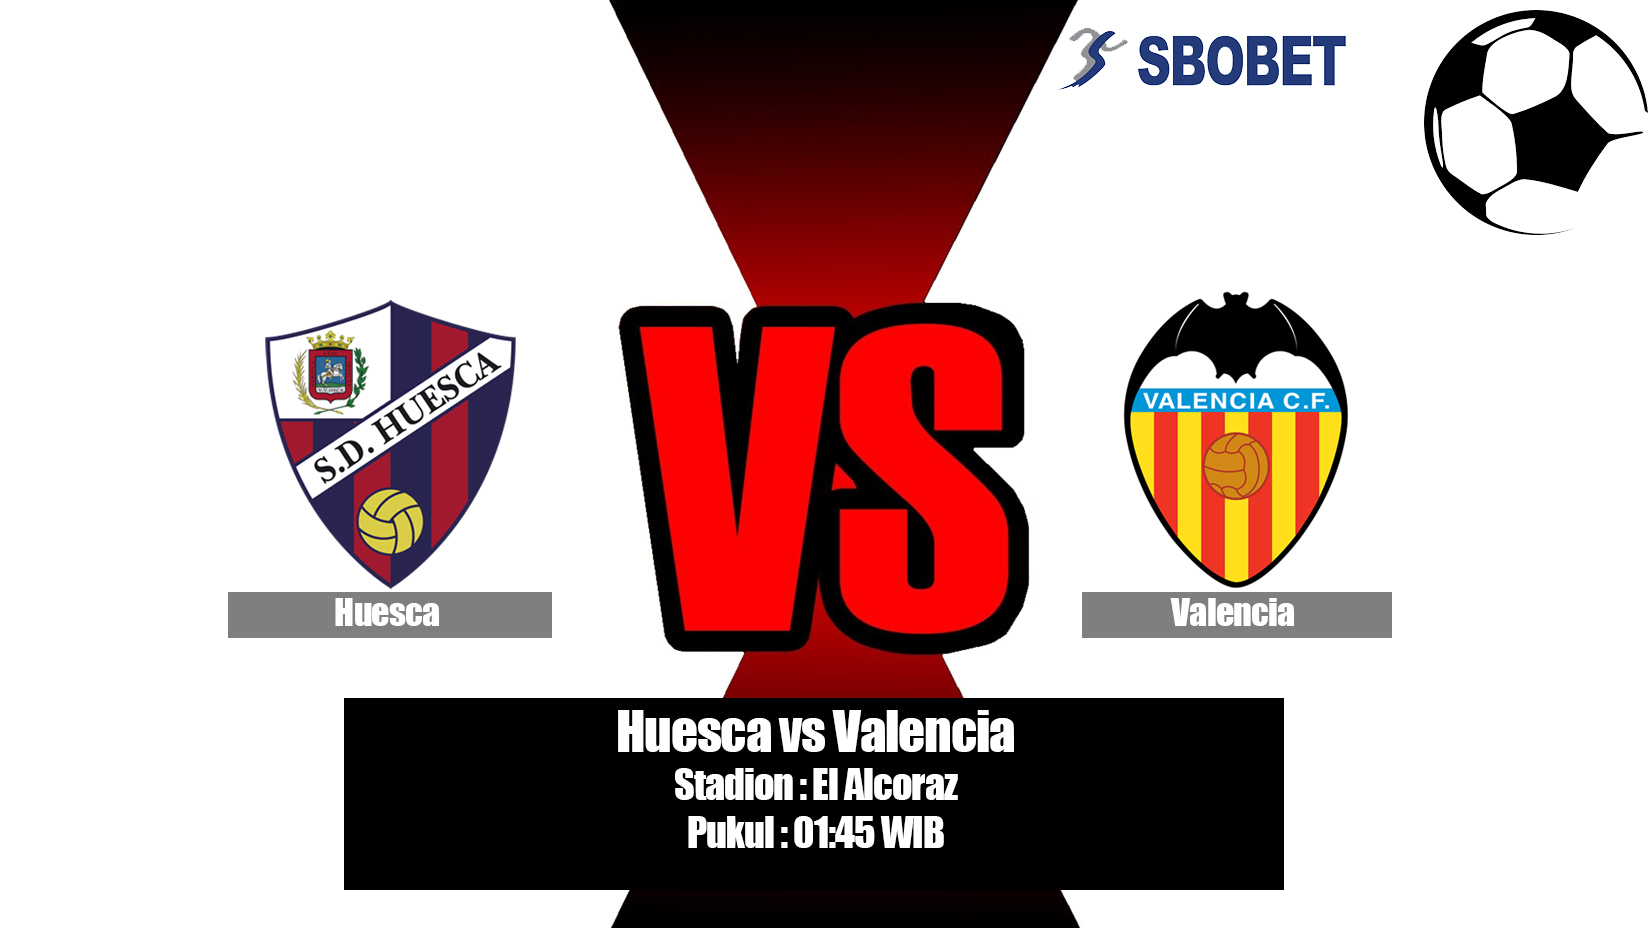 Prediksi Bola Huesca vs Valencia 6 Mei 2019